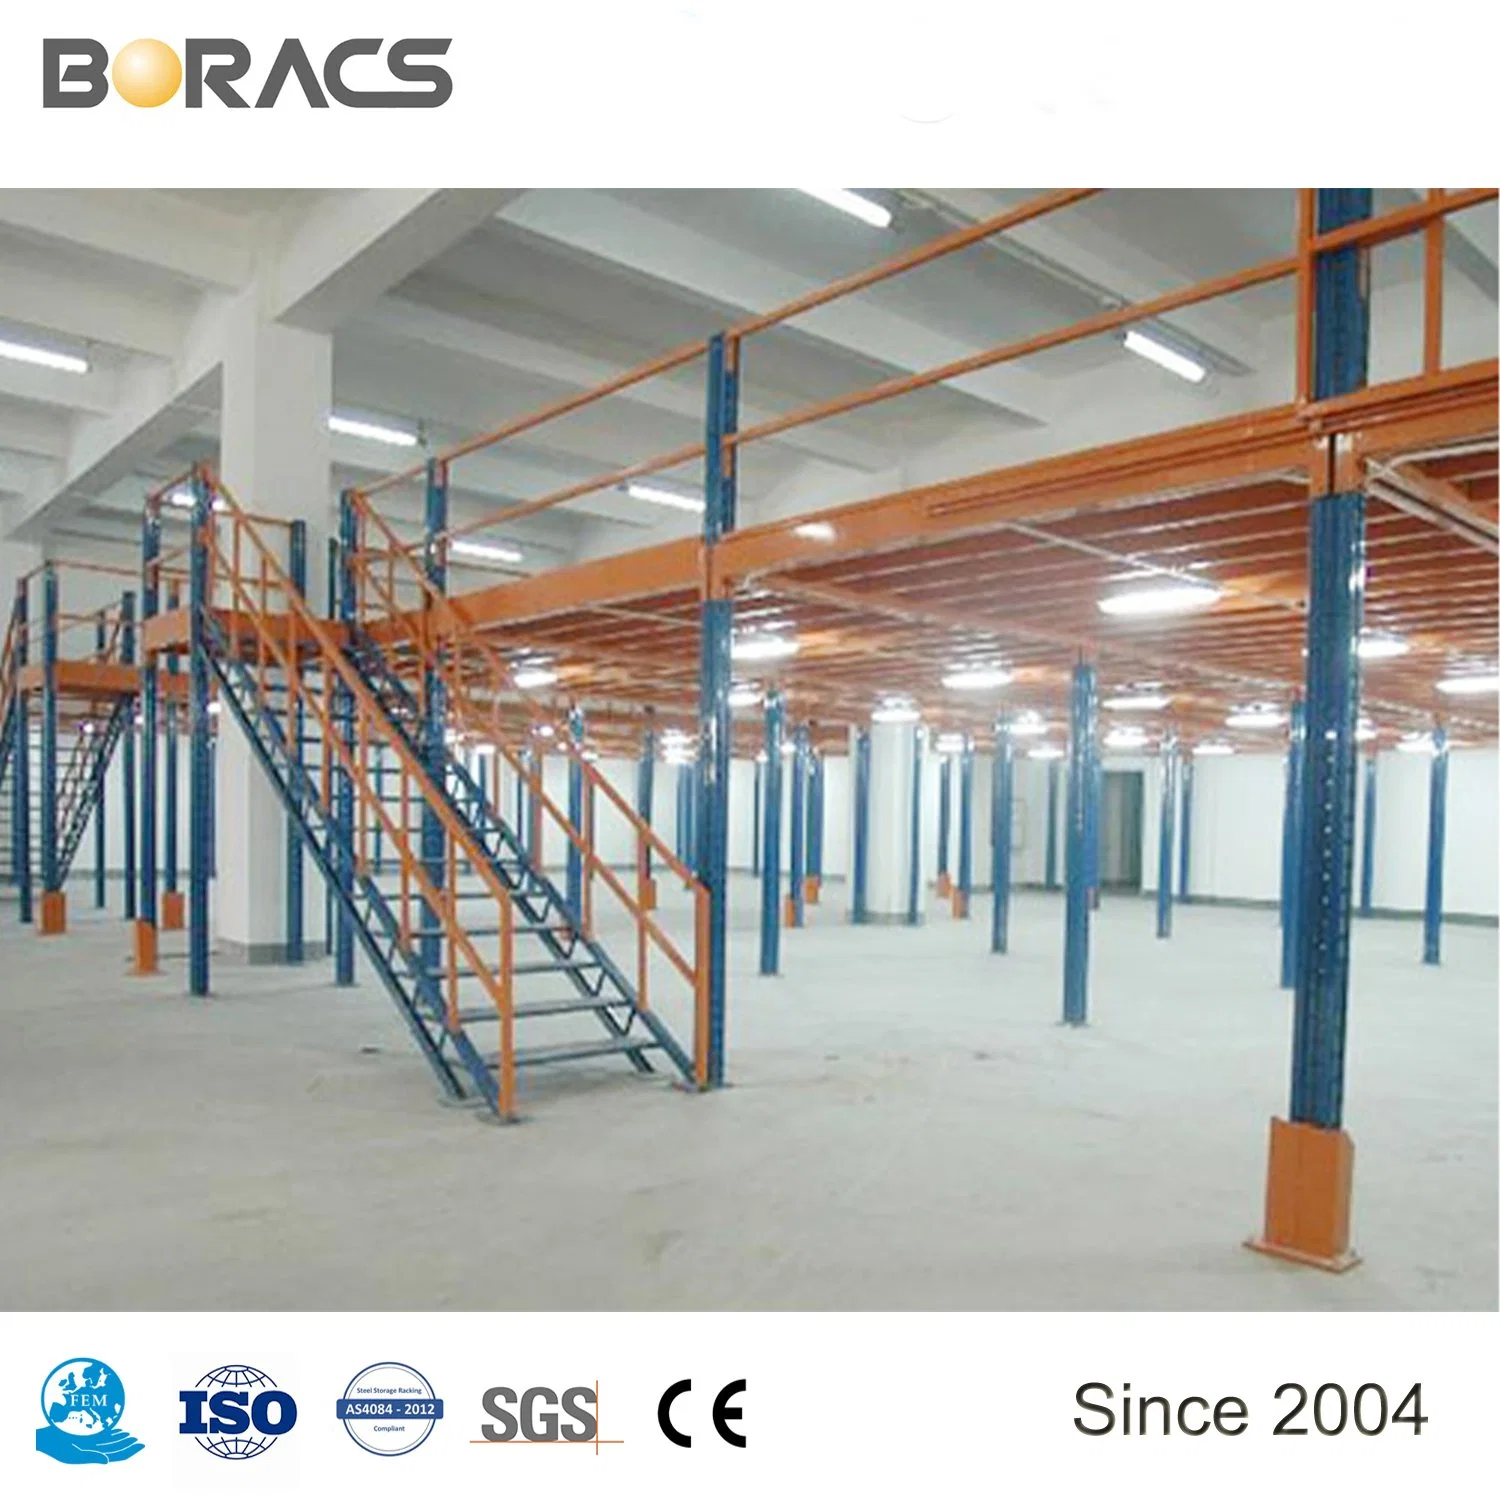 Metal Galvanized Decking Rack Mezzanine with Fem/As4084 Certificates for Warehouse Storage